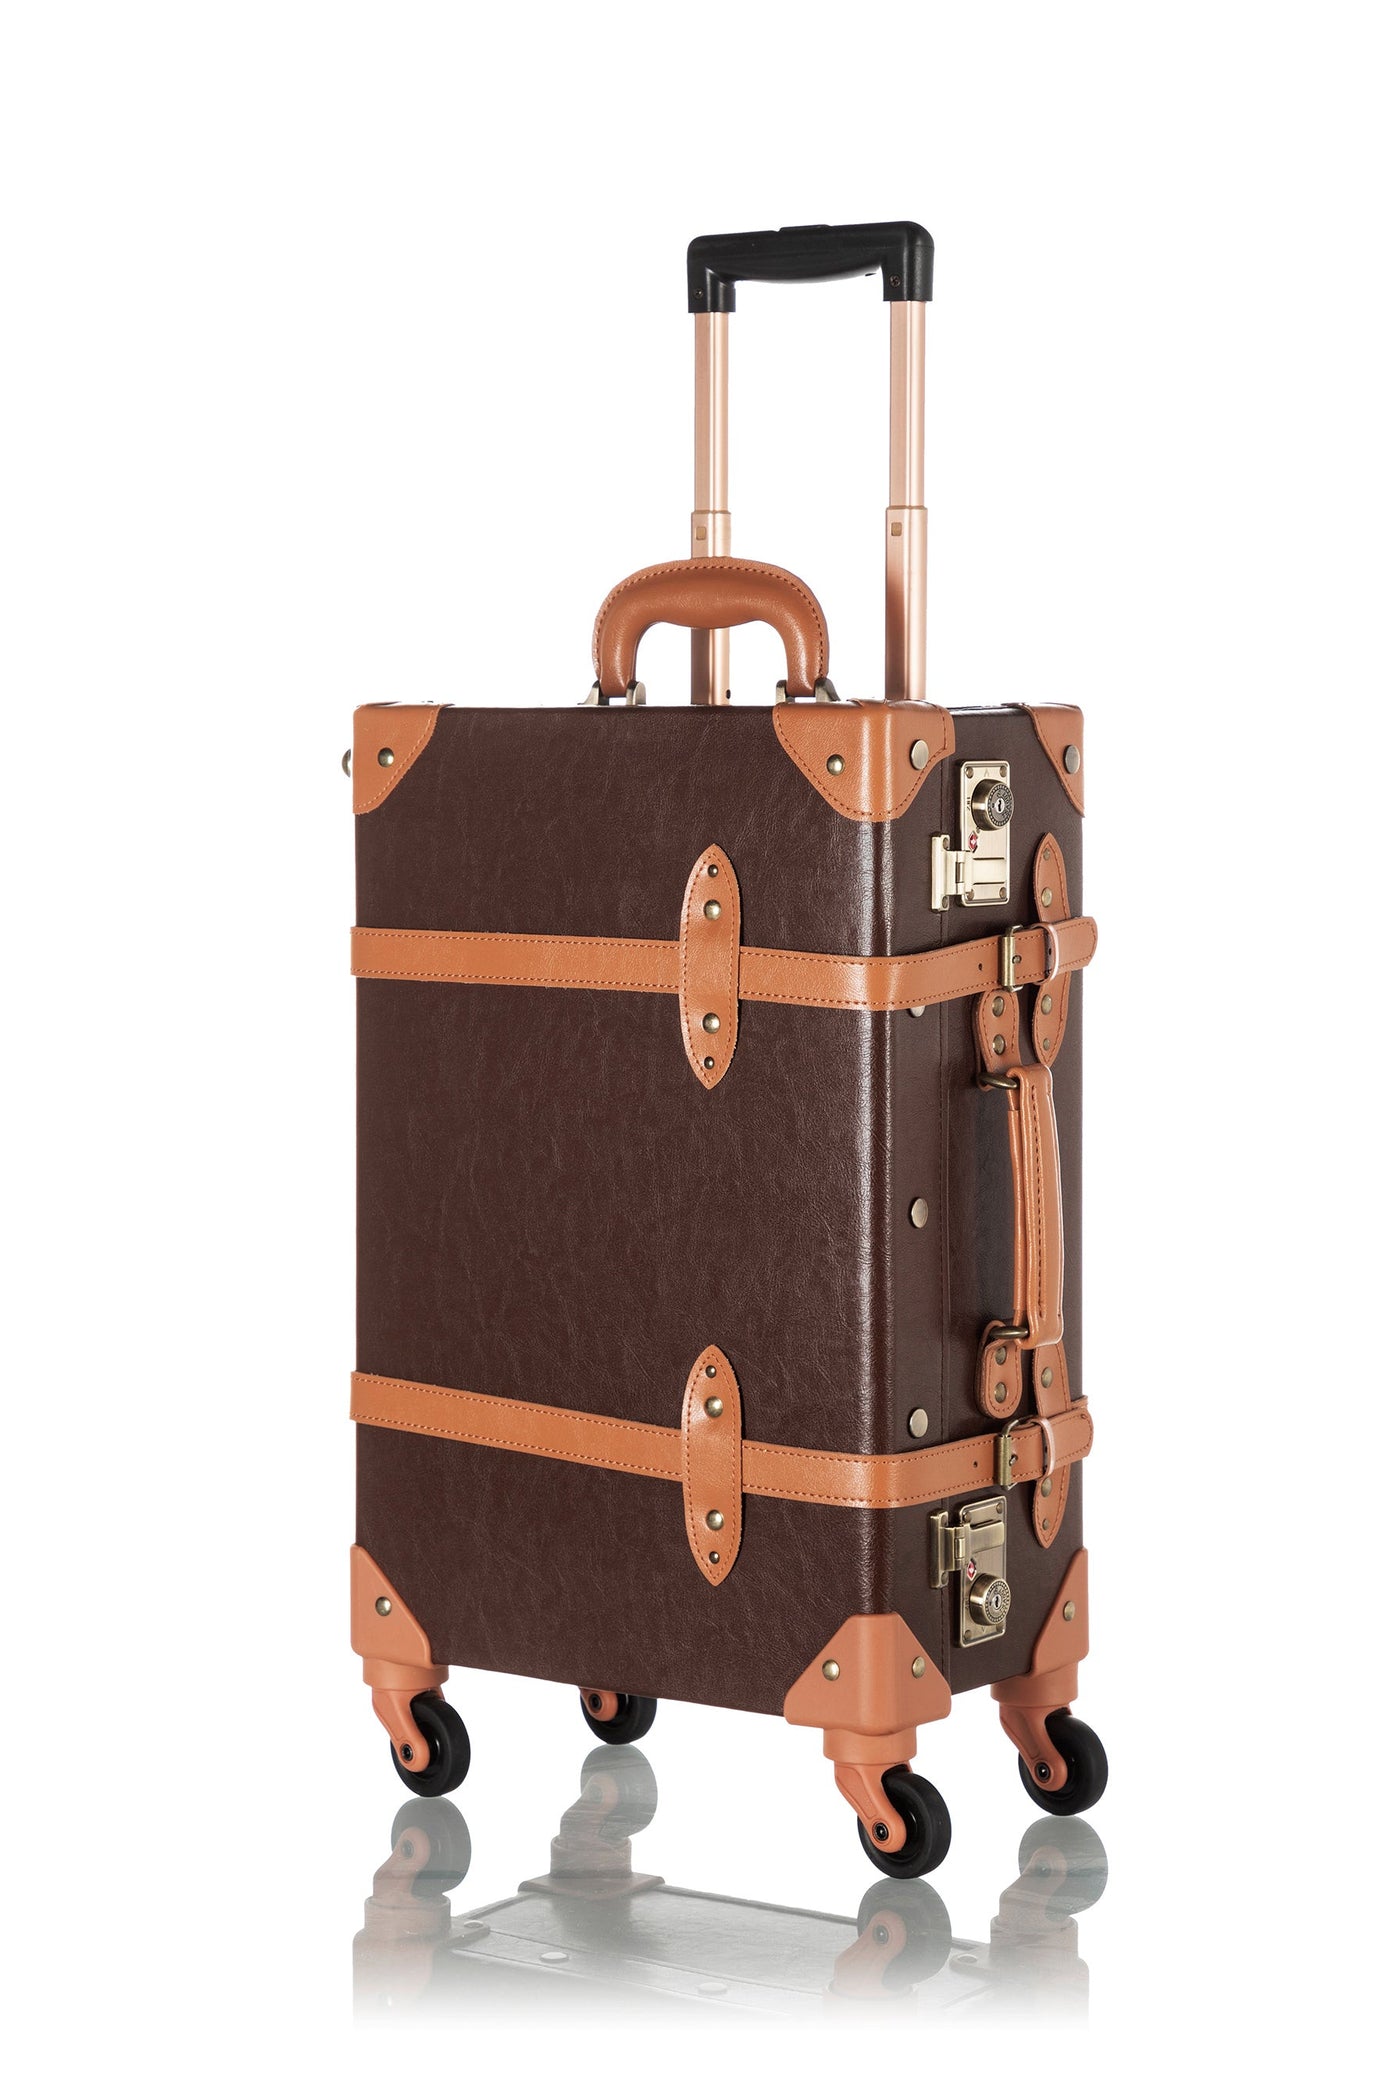 COTRUNKAGE Minimalist 2 Piece Vintage Luggage Sets Travel Carry On